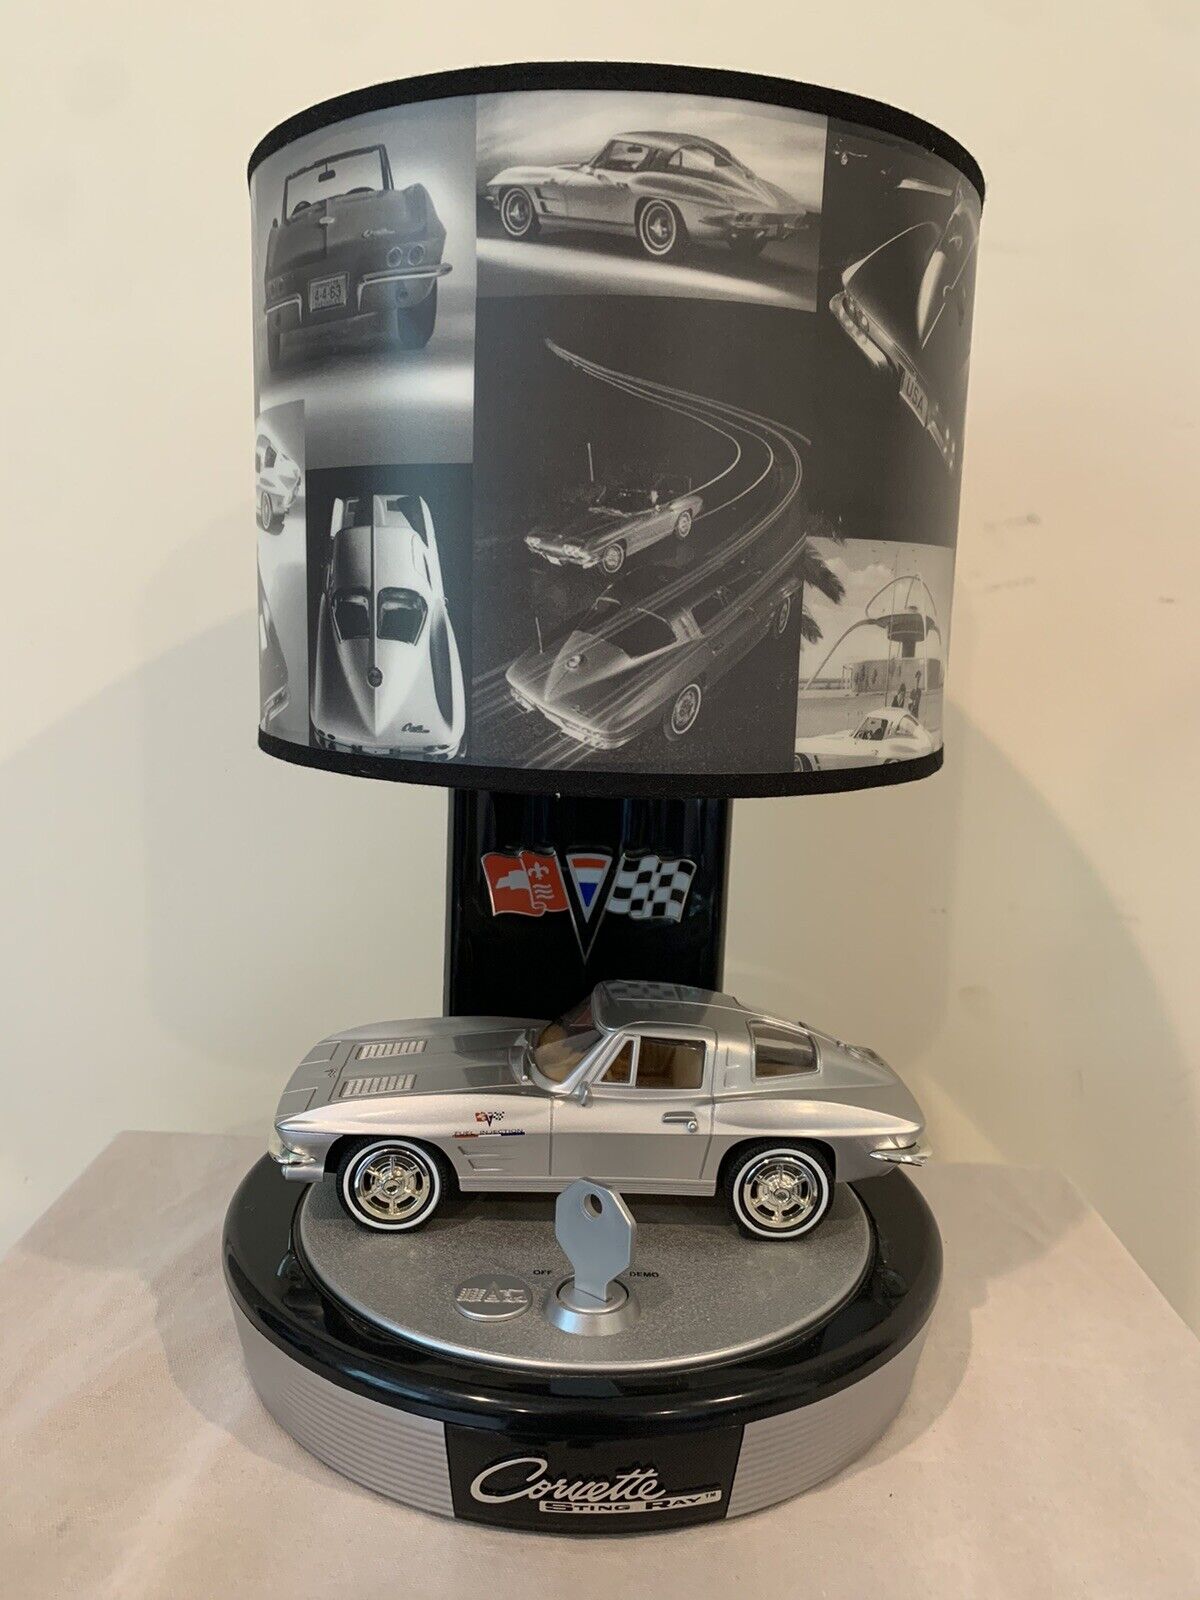 1963 Corvette Stingray Desk Table Lamp Light Works Ignition Shifting Sound